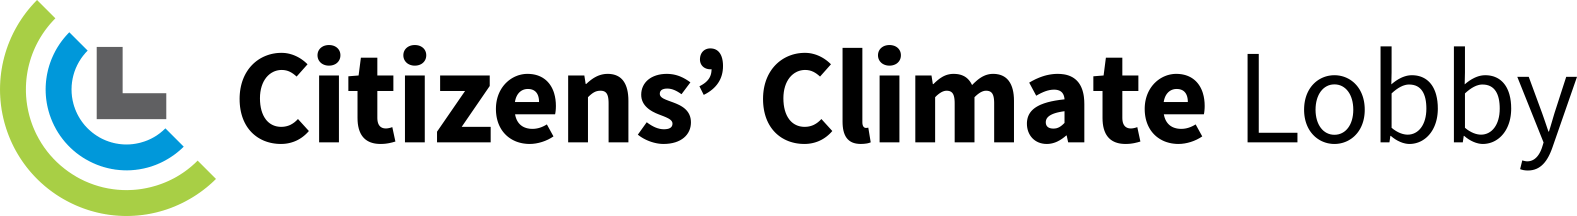 Citizens' Climate Lobby Logo